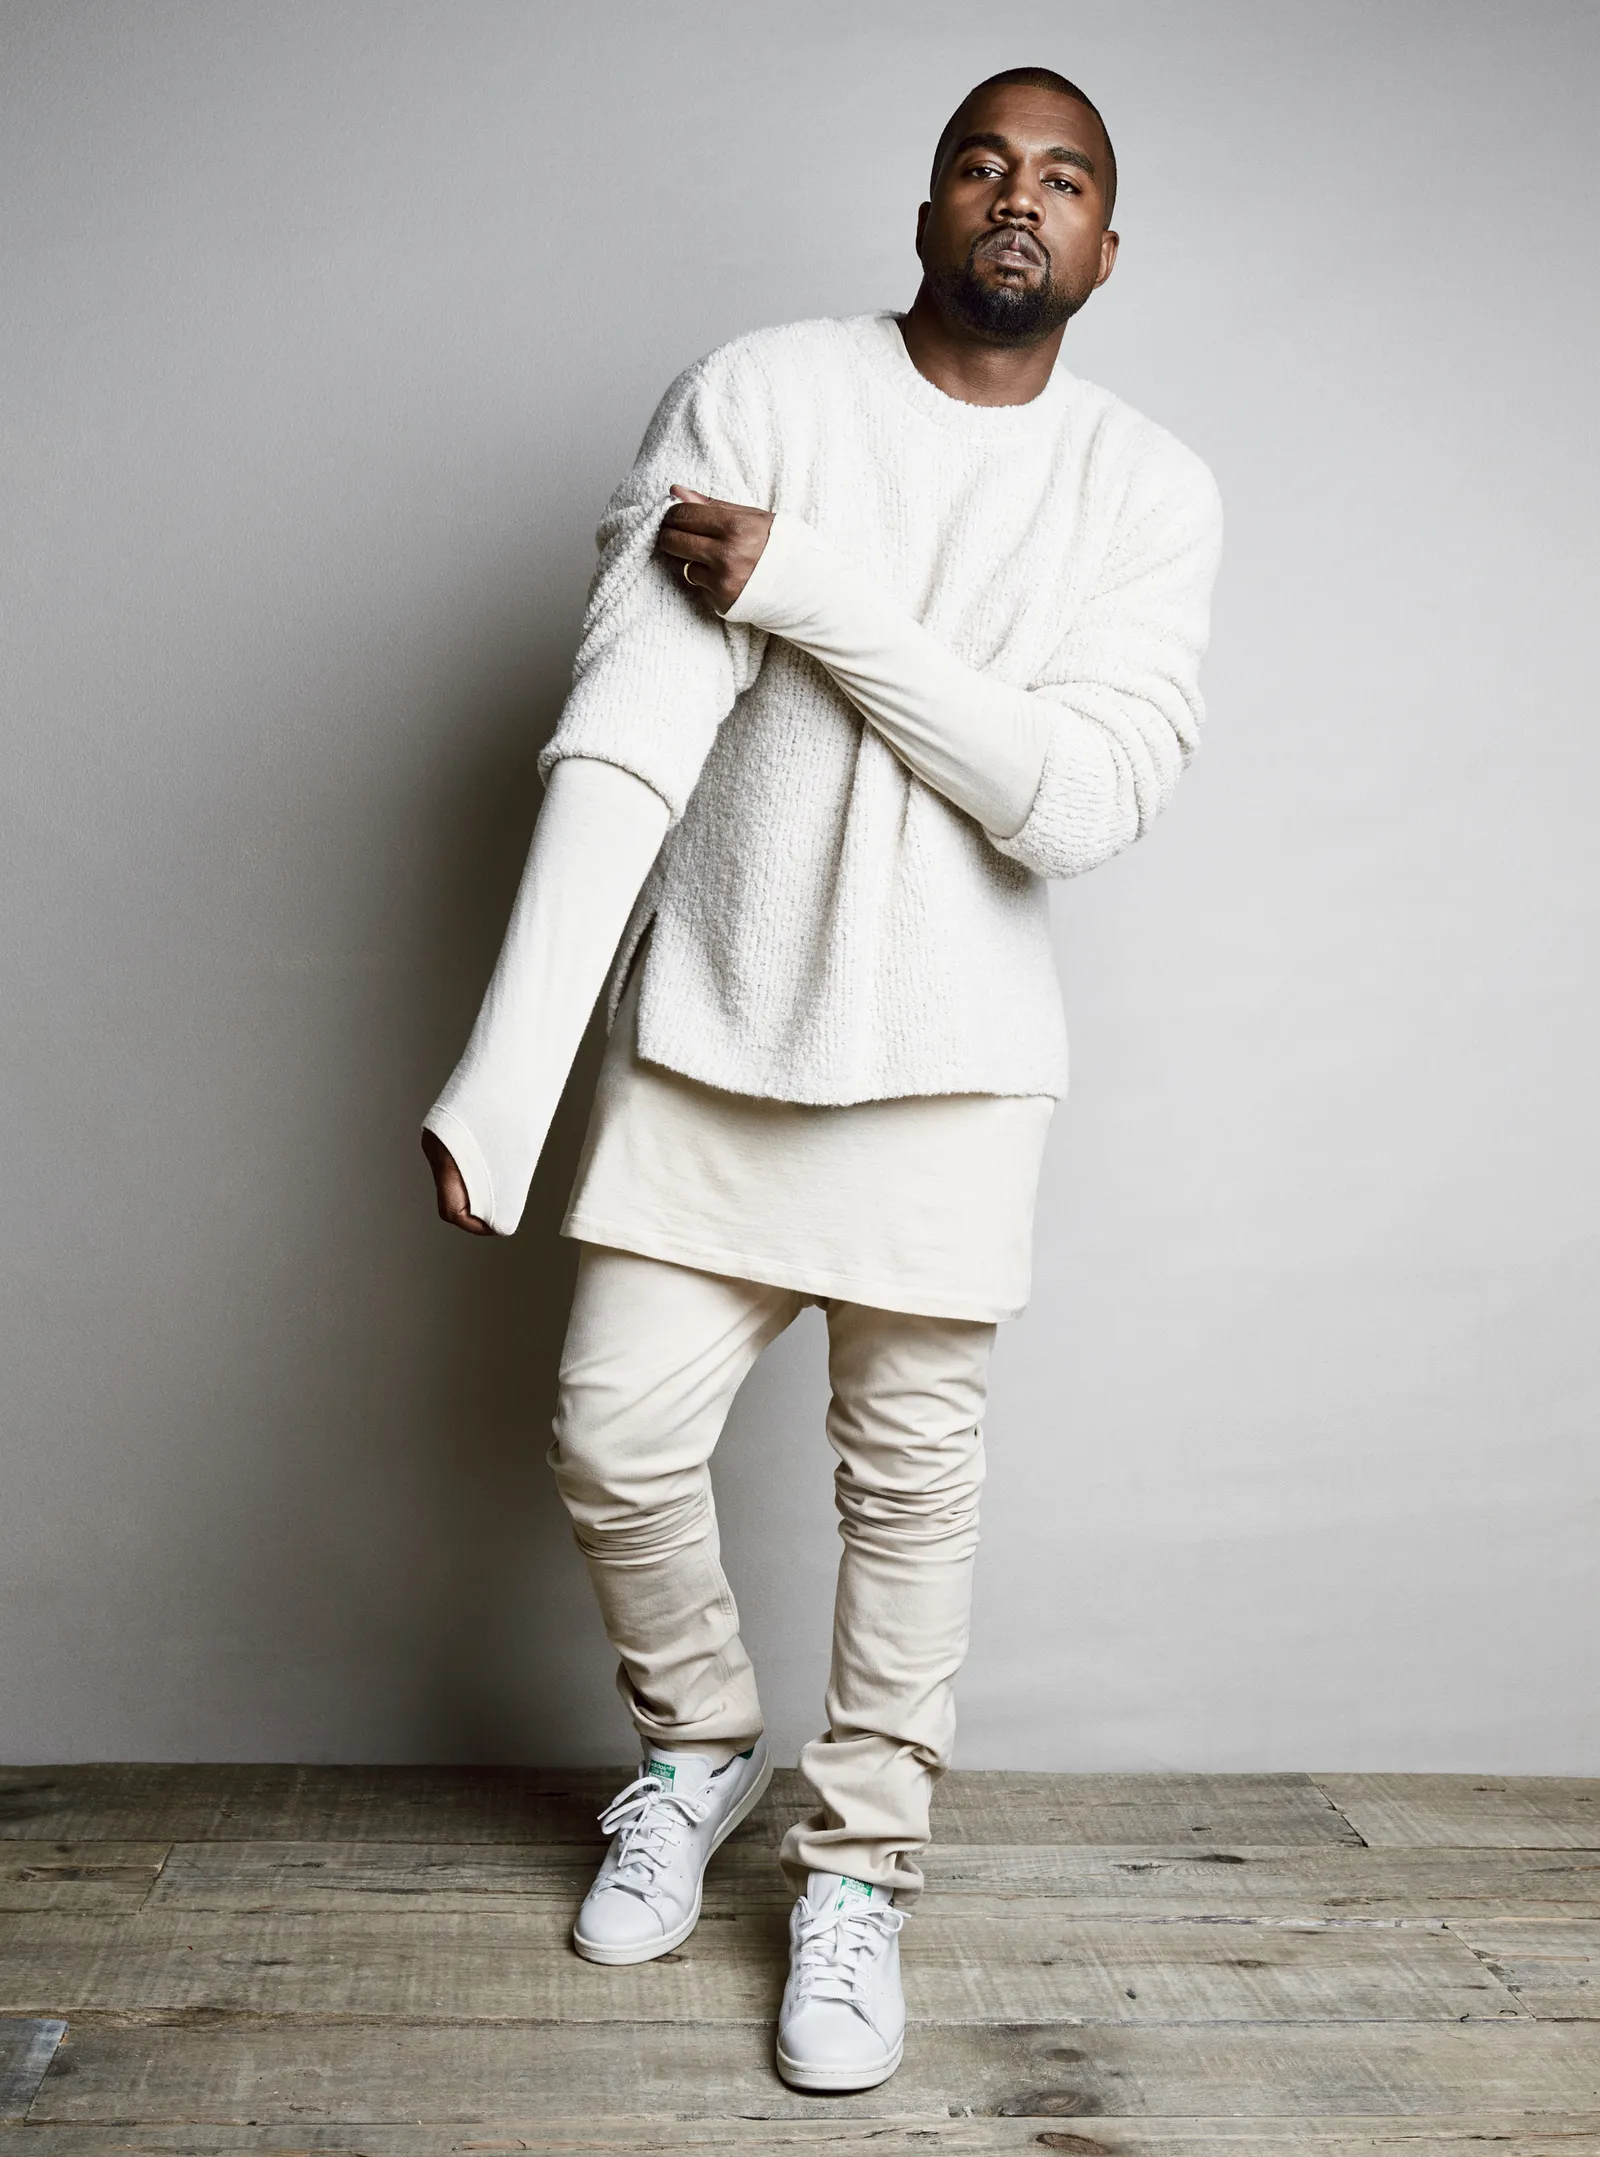 Kanye West in OG adidas Stan Smith